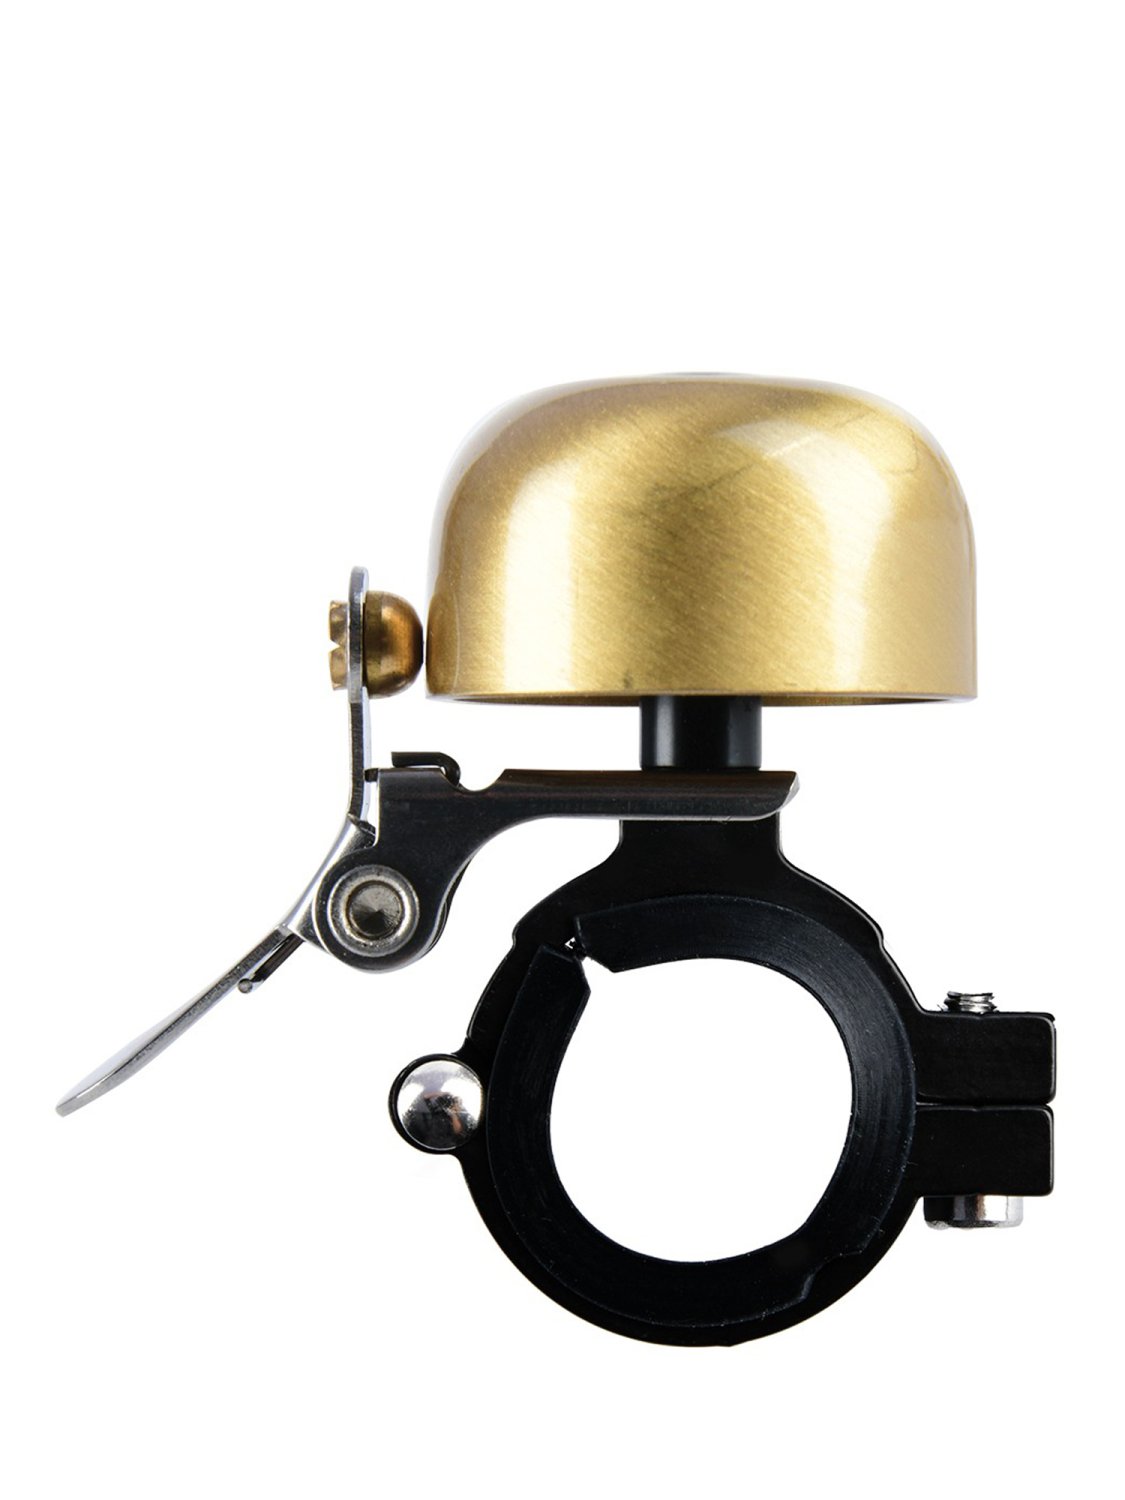 Звонок велосипедный Oxford Mini Ping Brass Bell Gold б/р, BE157G brushed gold brass kitchen sink faucet hot